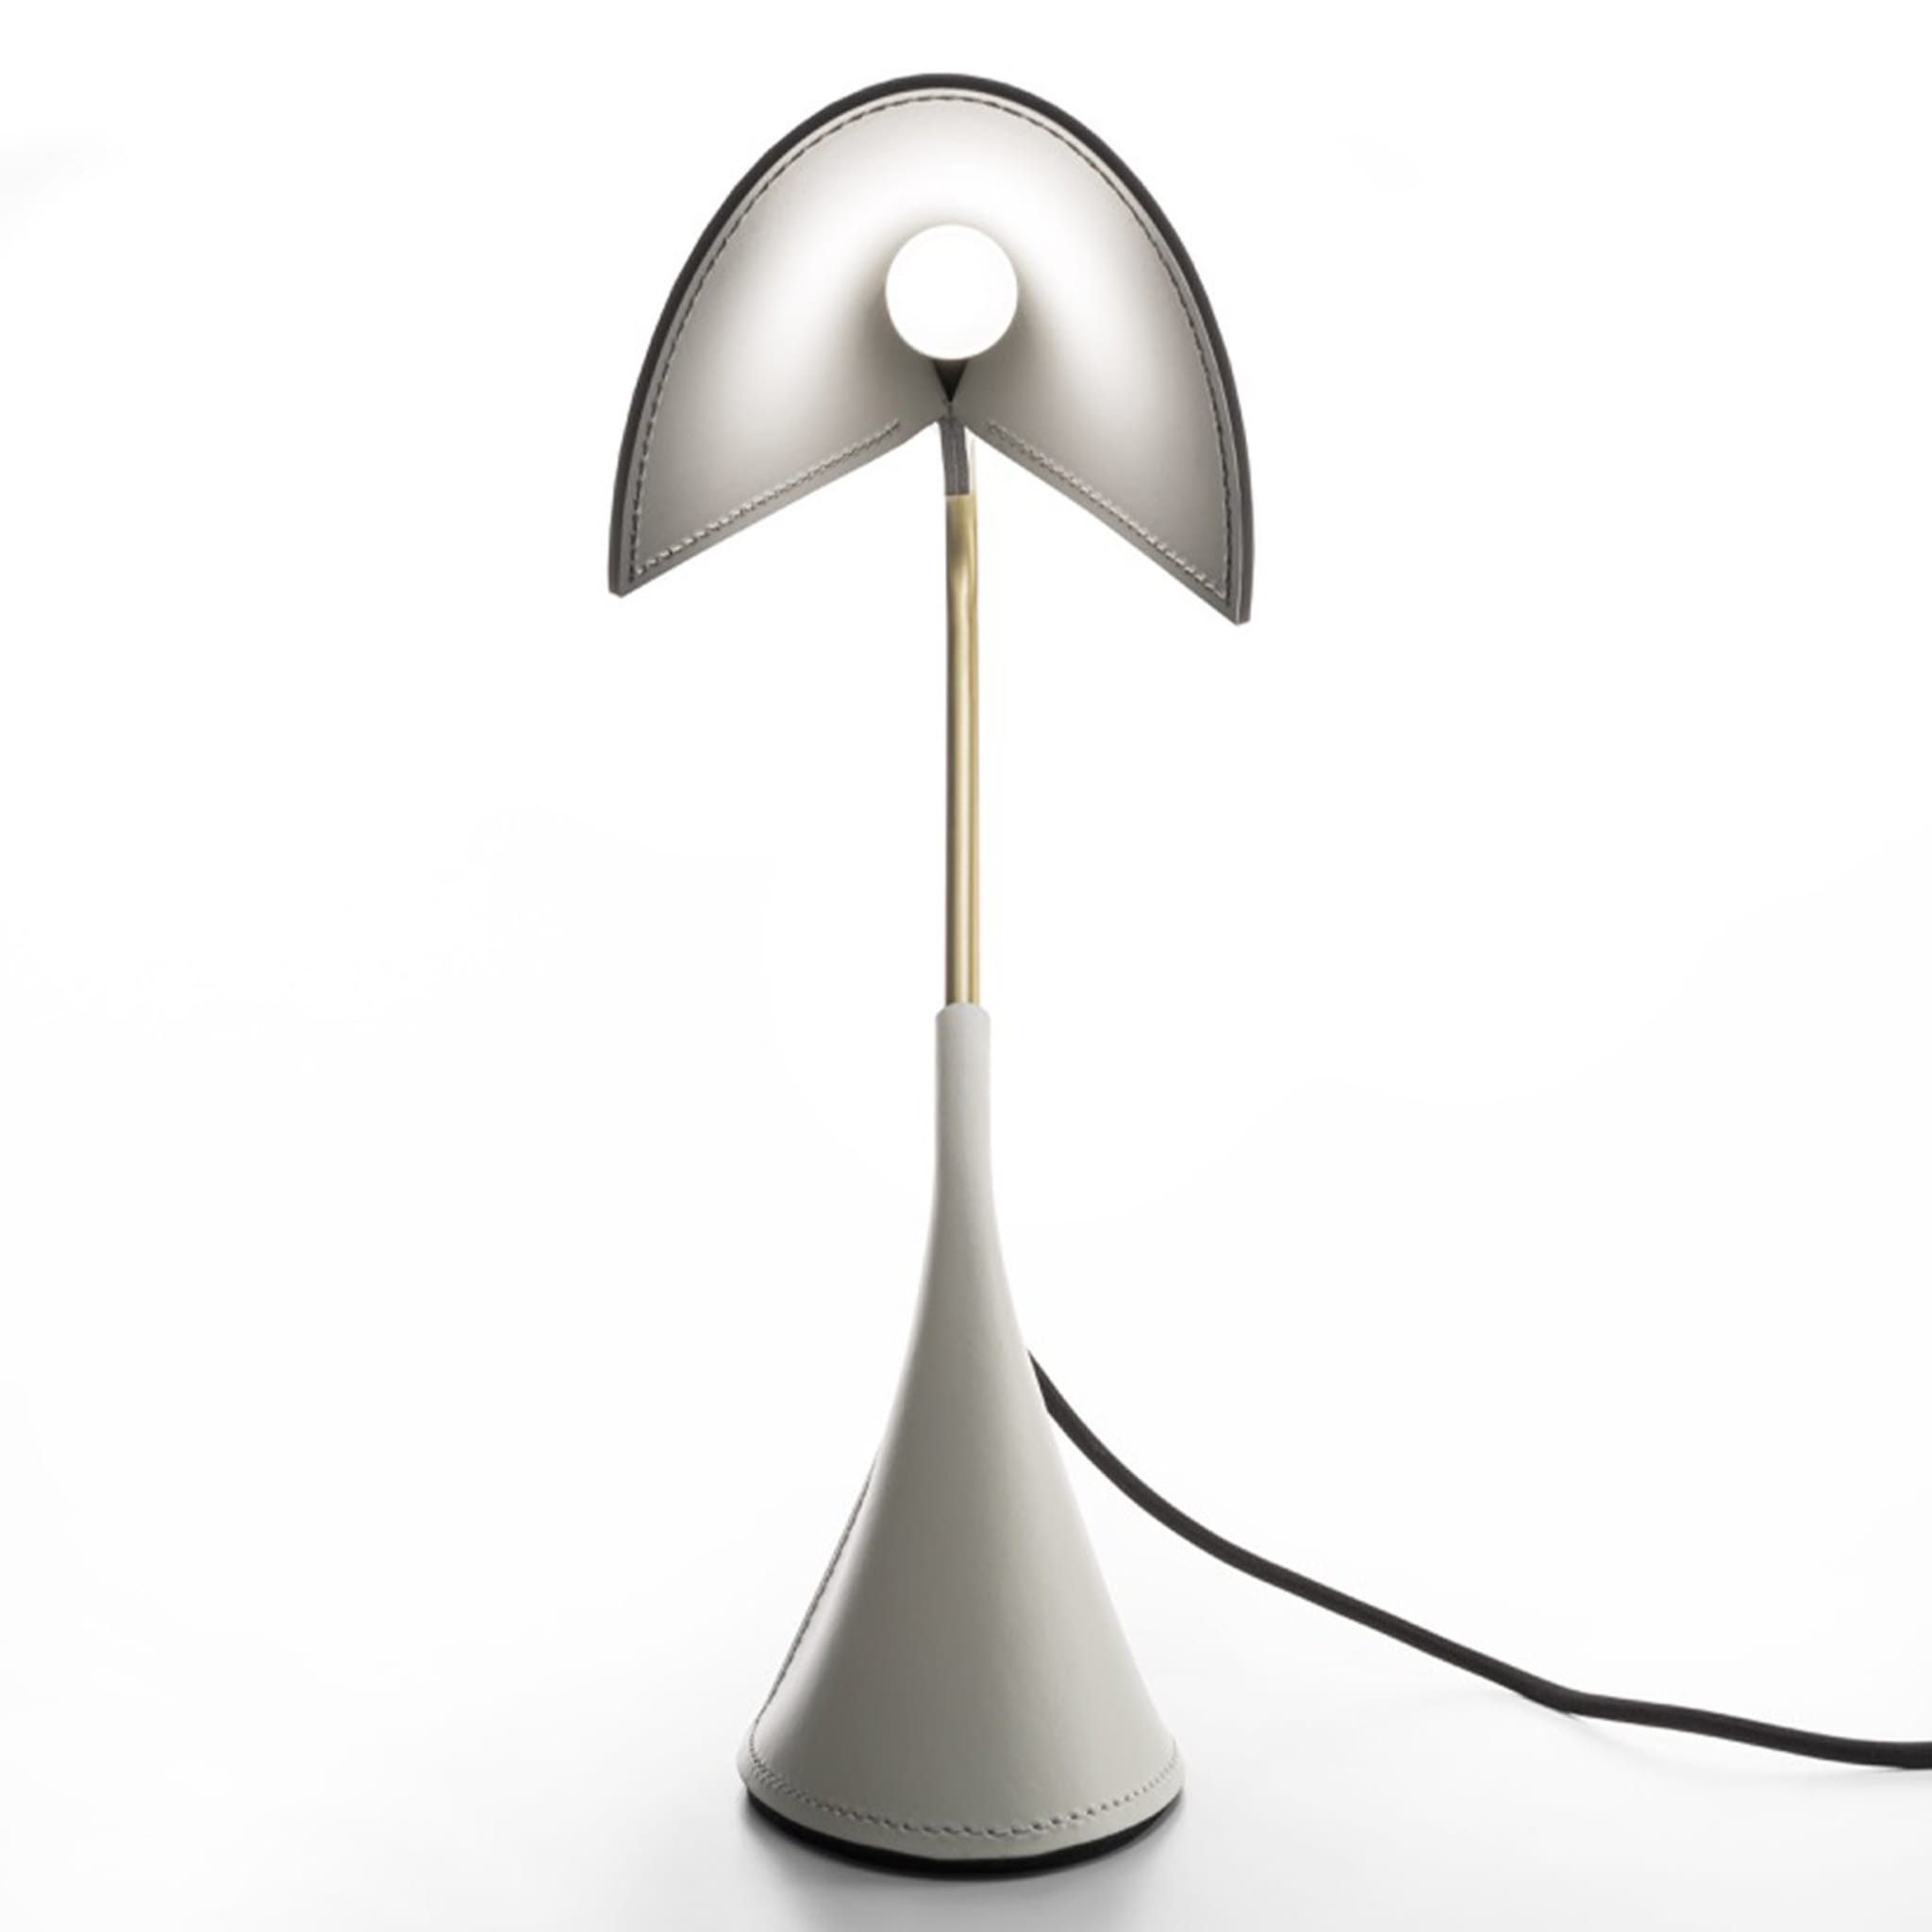 Duffy White Desk Lamp #1 - Alternative view 2